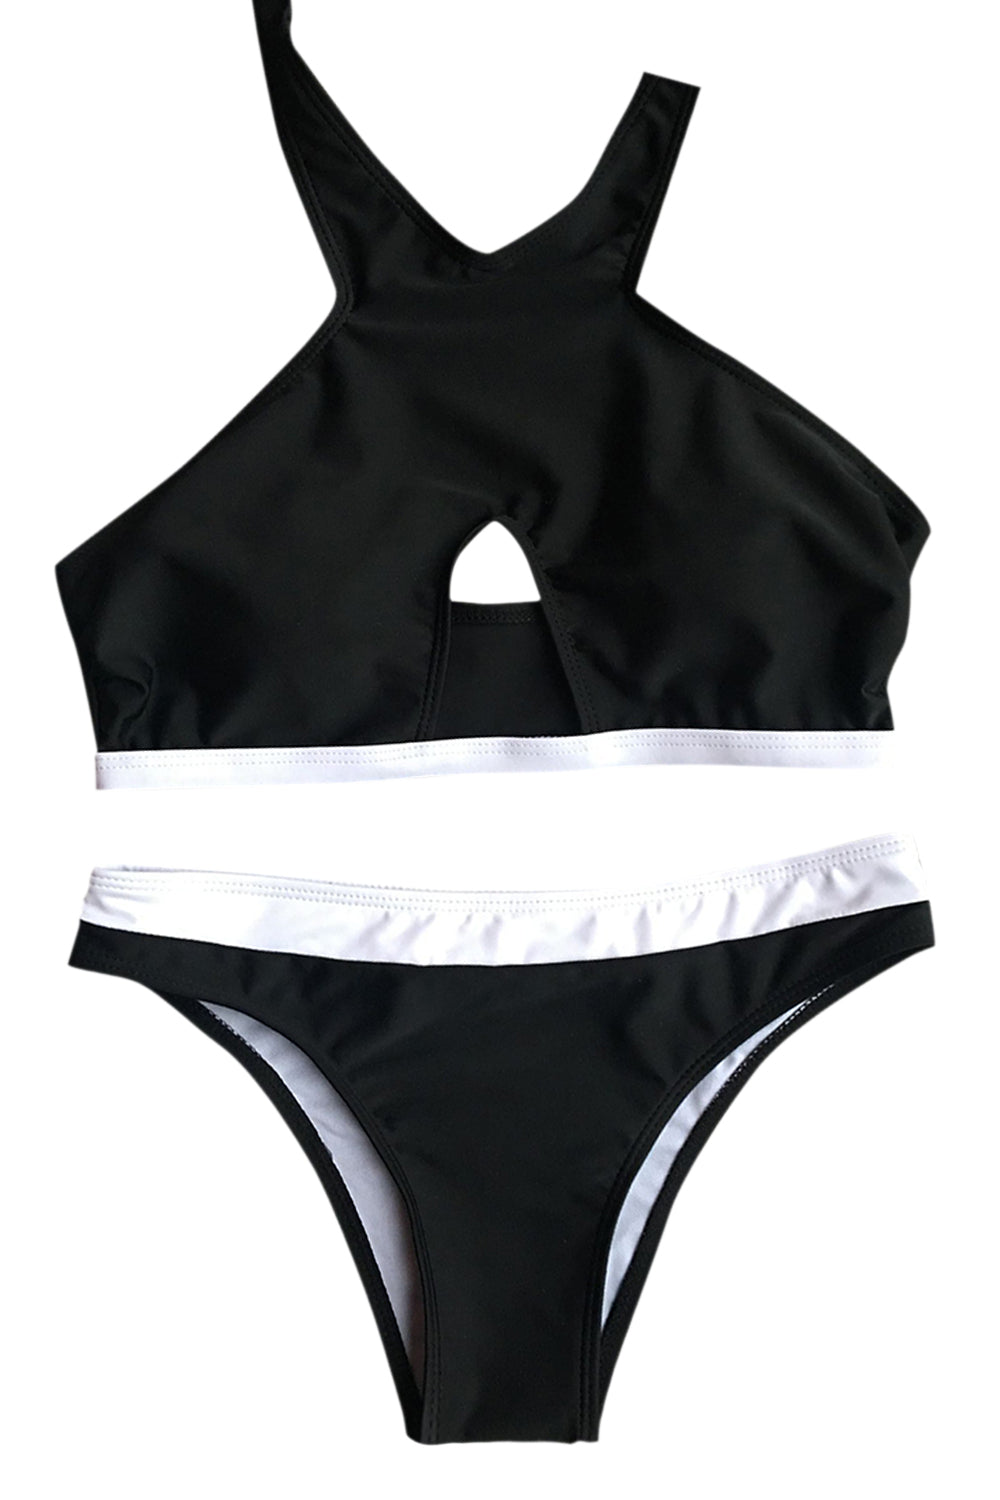 Iyasson Sexy Black Hollowed out Bikini Sets